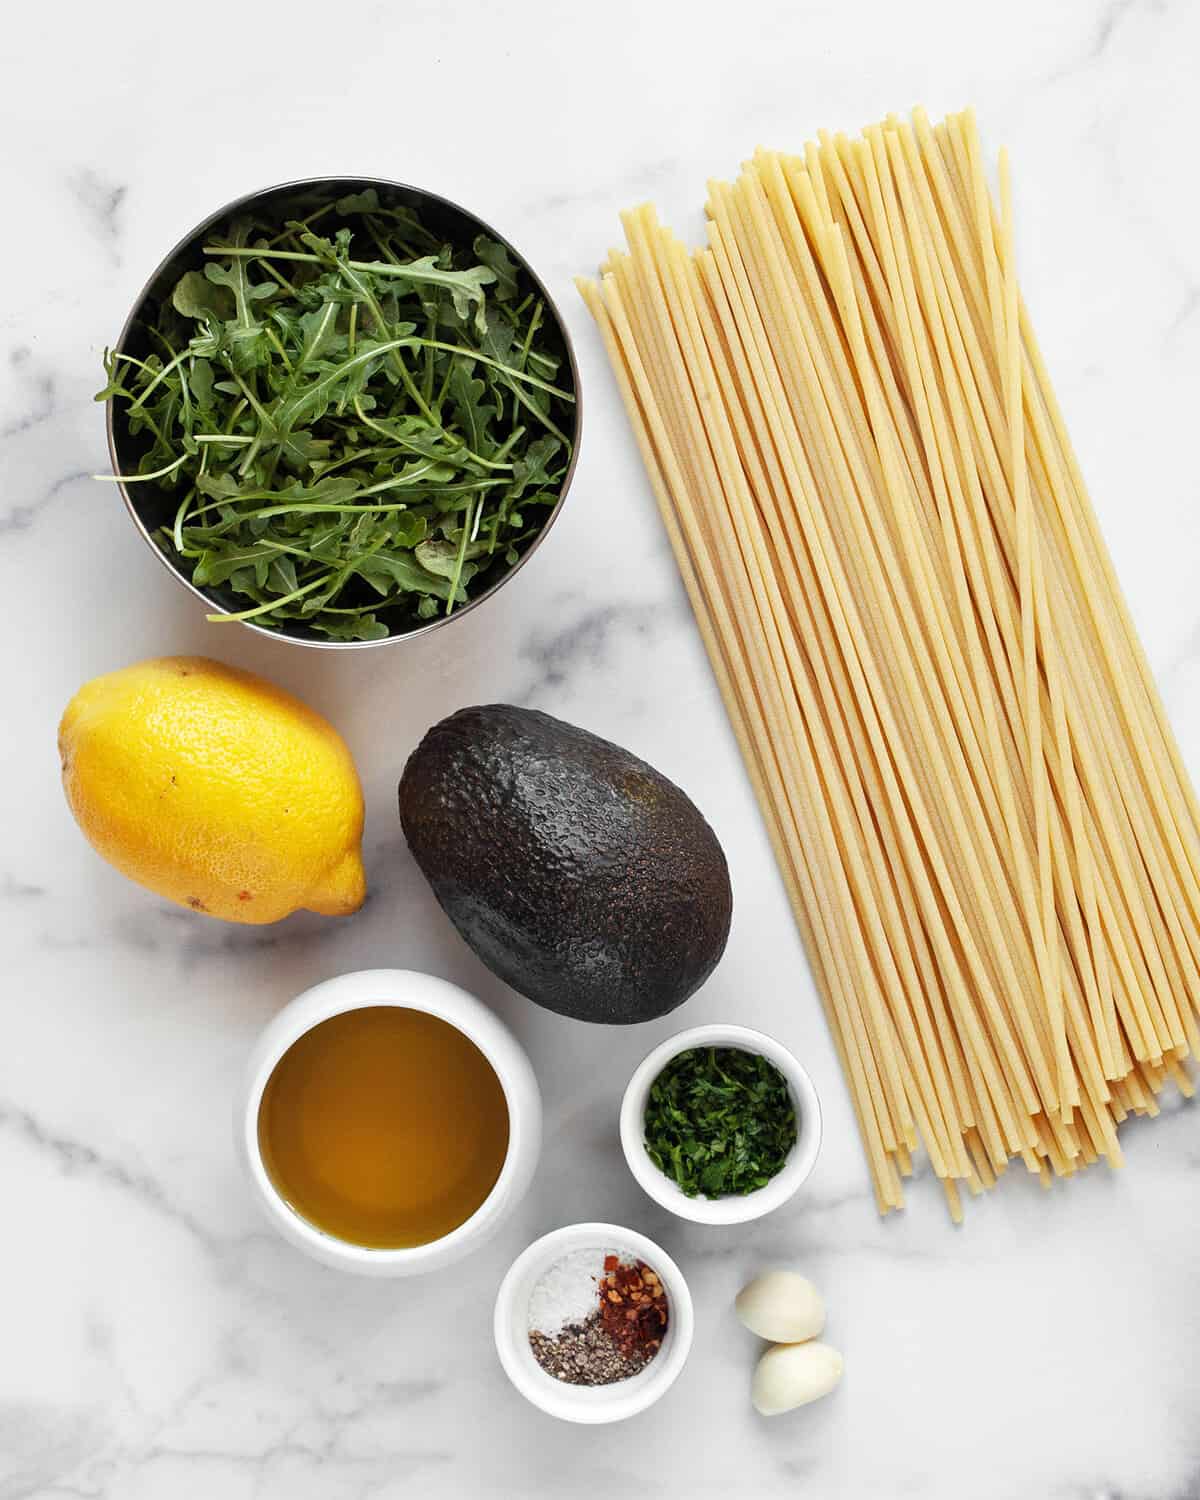 Ingredients including avocado, lemon, garlic, spices, parsley, arugula and pasta.